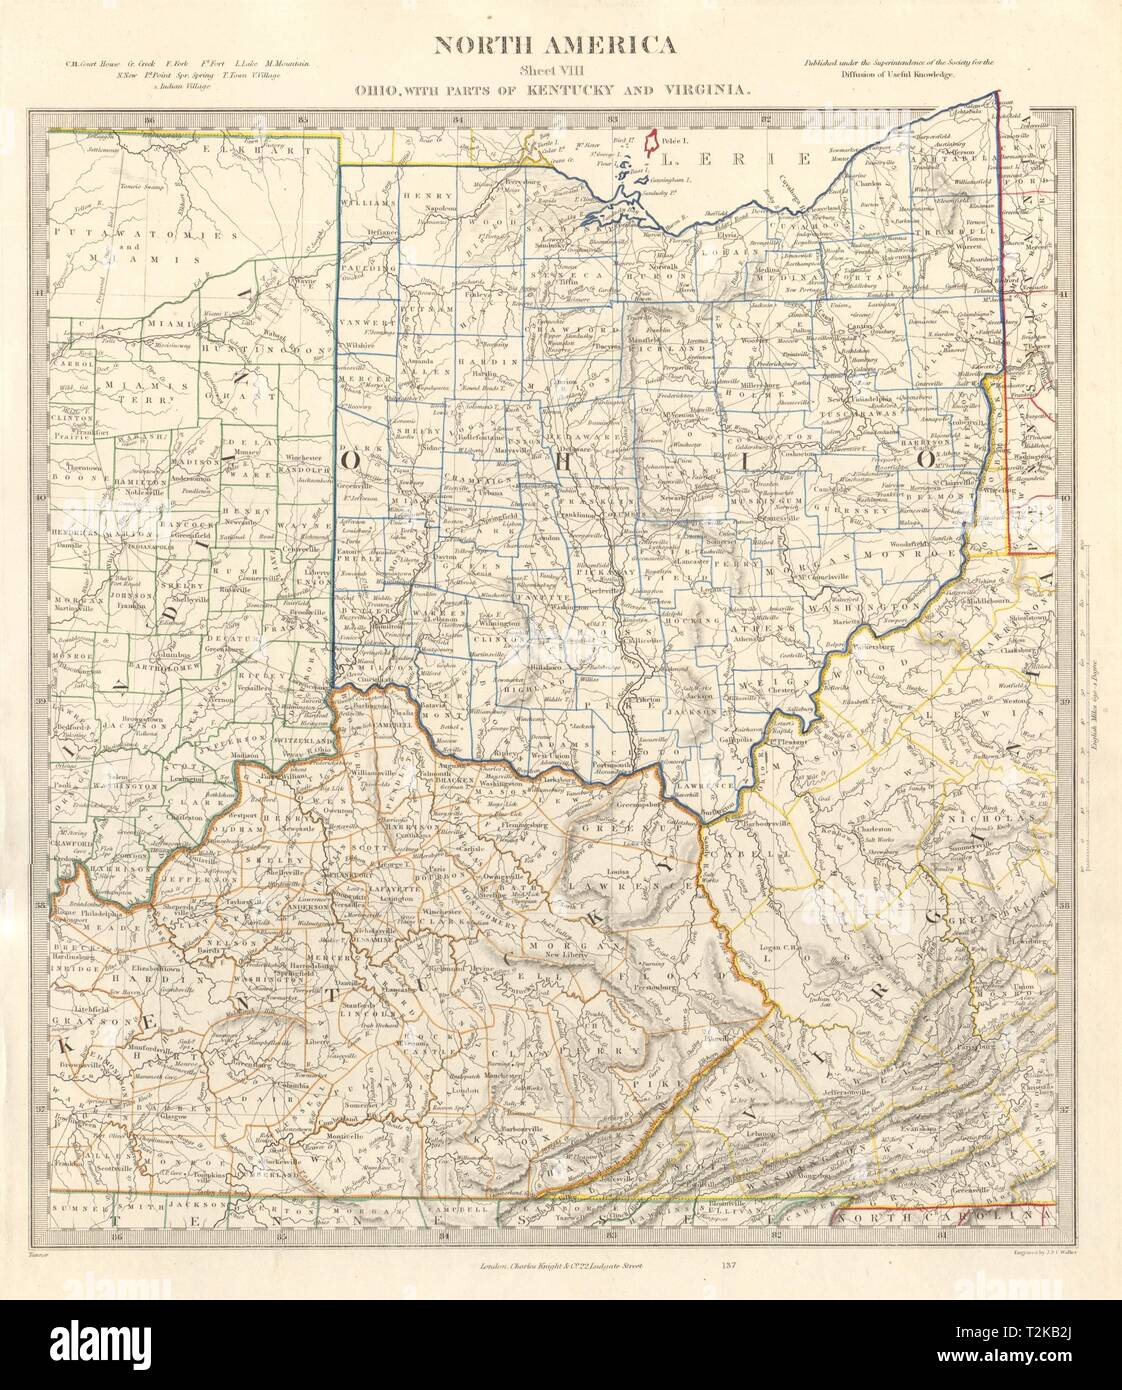 USA. Ohio with parts of Kentucky, Virginia & Indiana. Counties. SDUK 1846 map Stock Photo